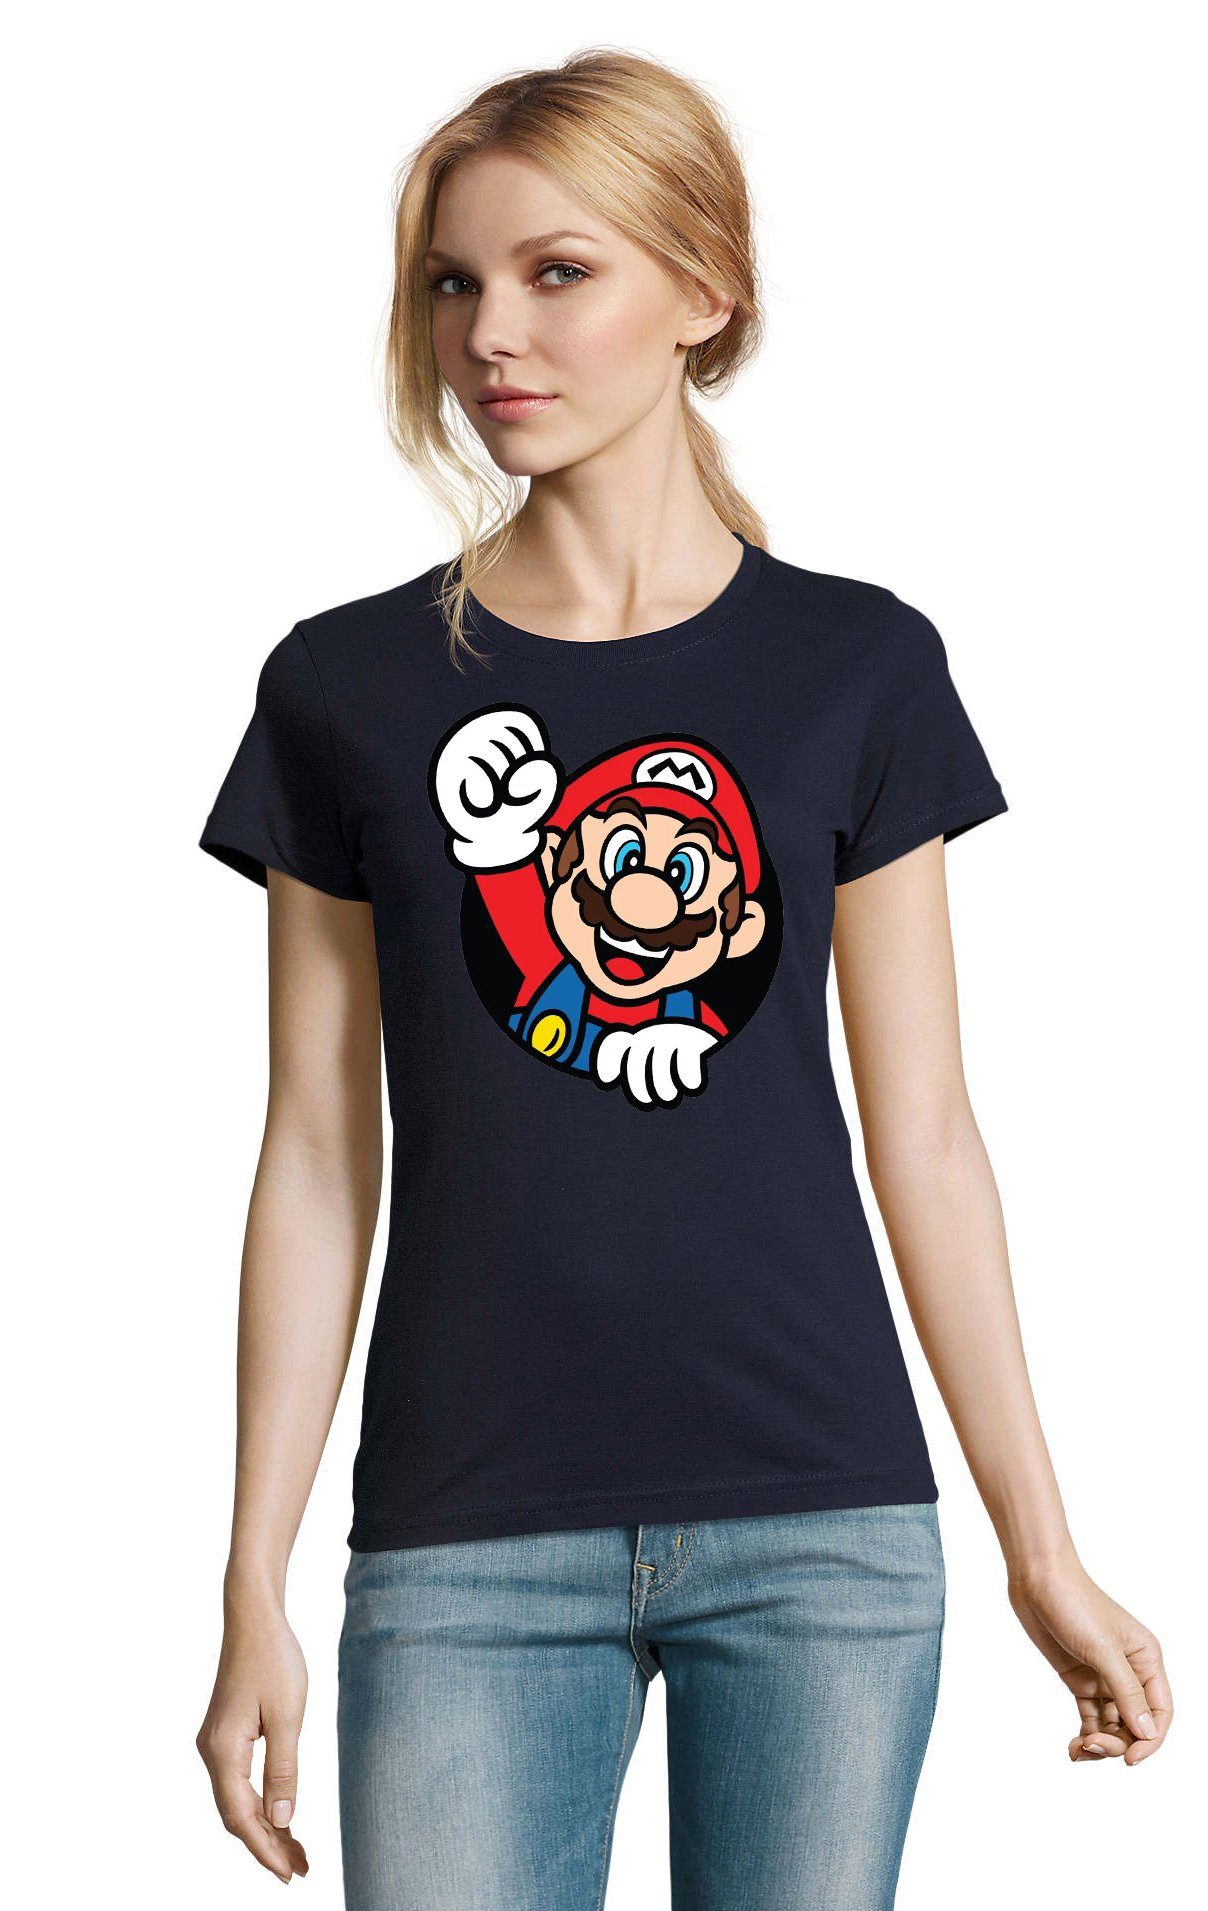 Blondie & Brownie T-Shirt Damen Super Mario Faust Nerd Konsole Gaming Spiel Nintendo Navyblau